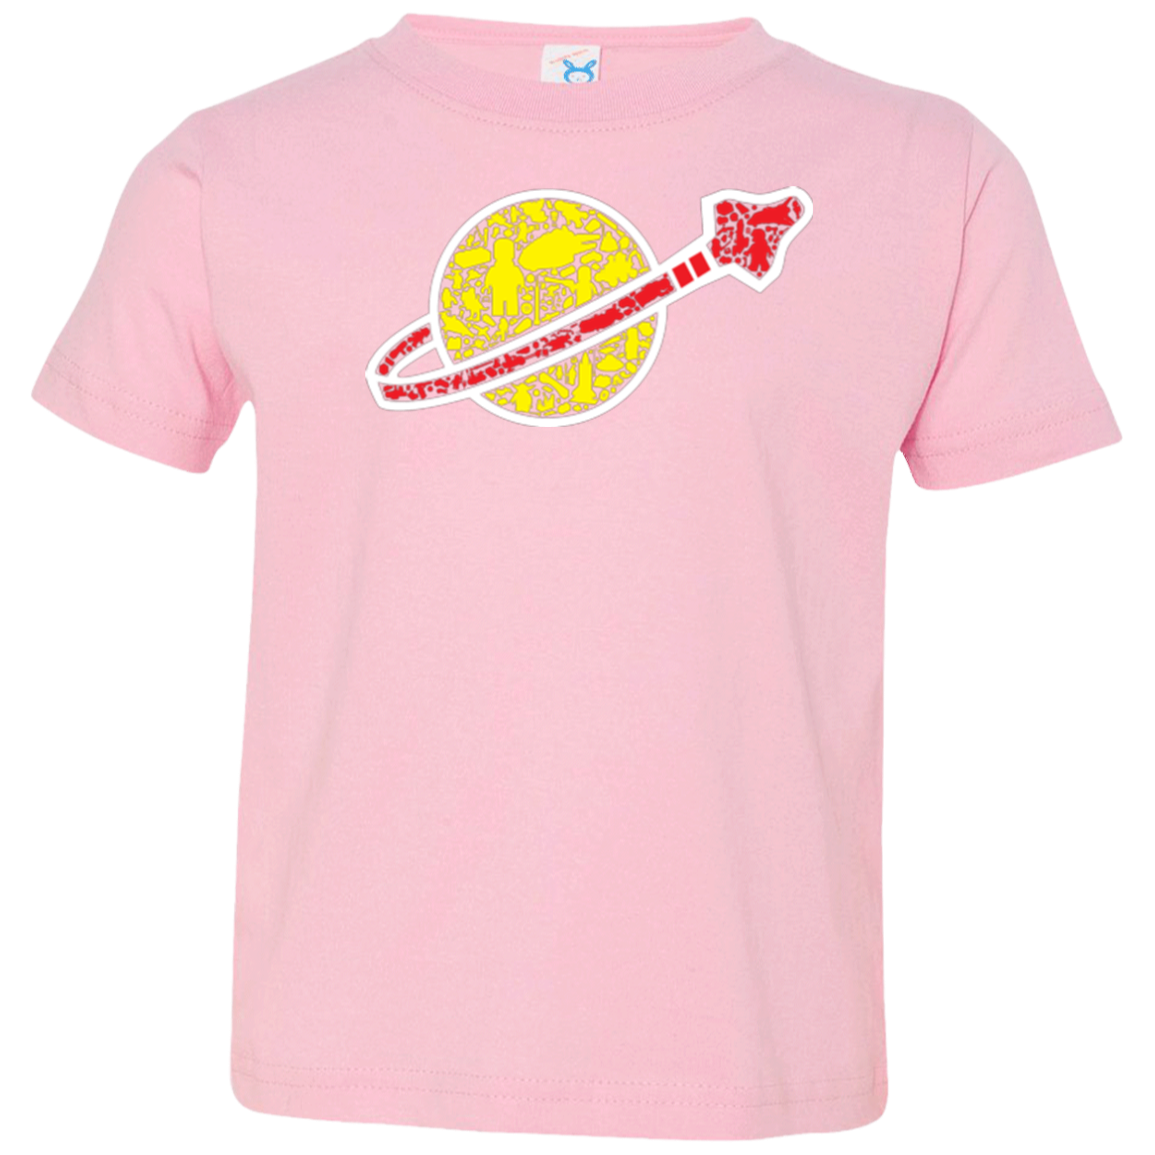 Building in Space Toddler Premium T-Shirt